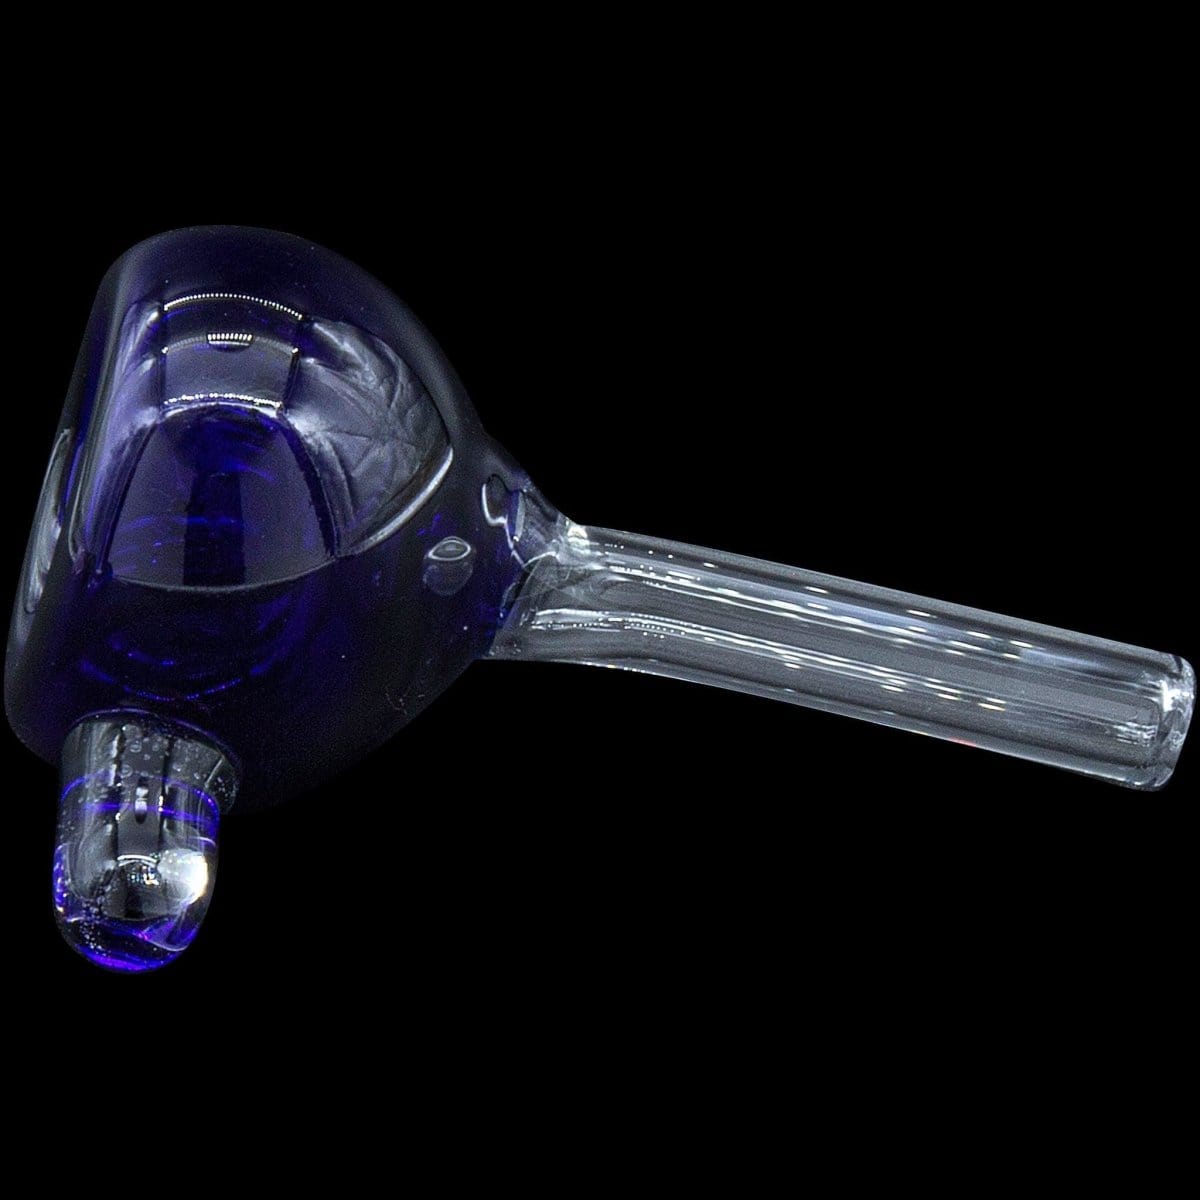 LA Pipes Smoking Accessory Bubble Bowl 9mm Pull-Stem Slide